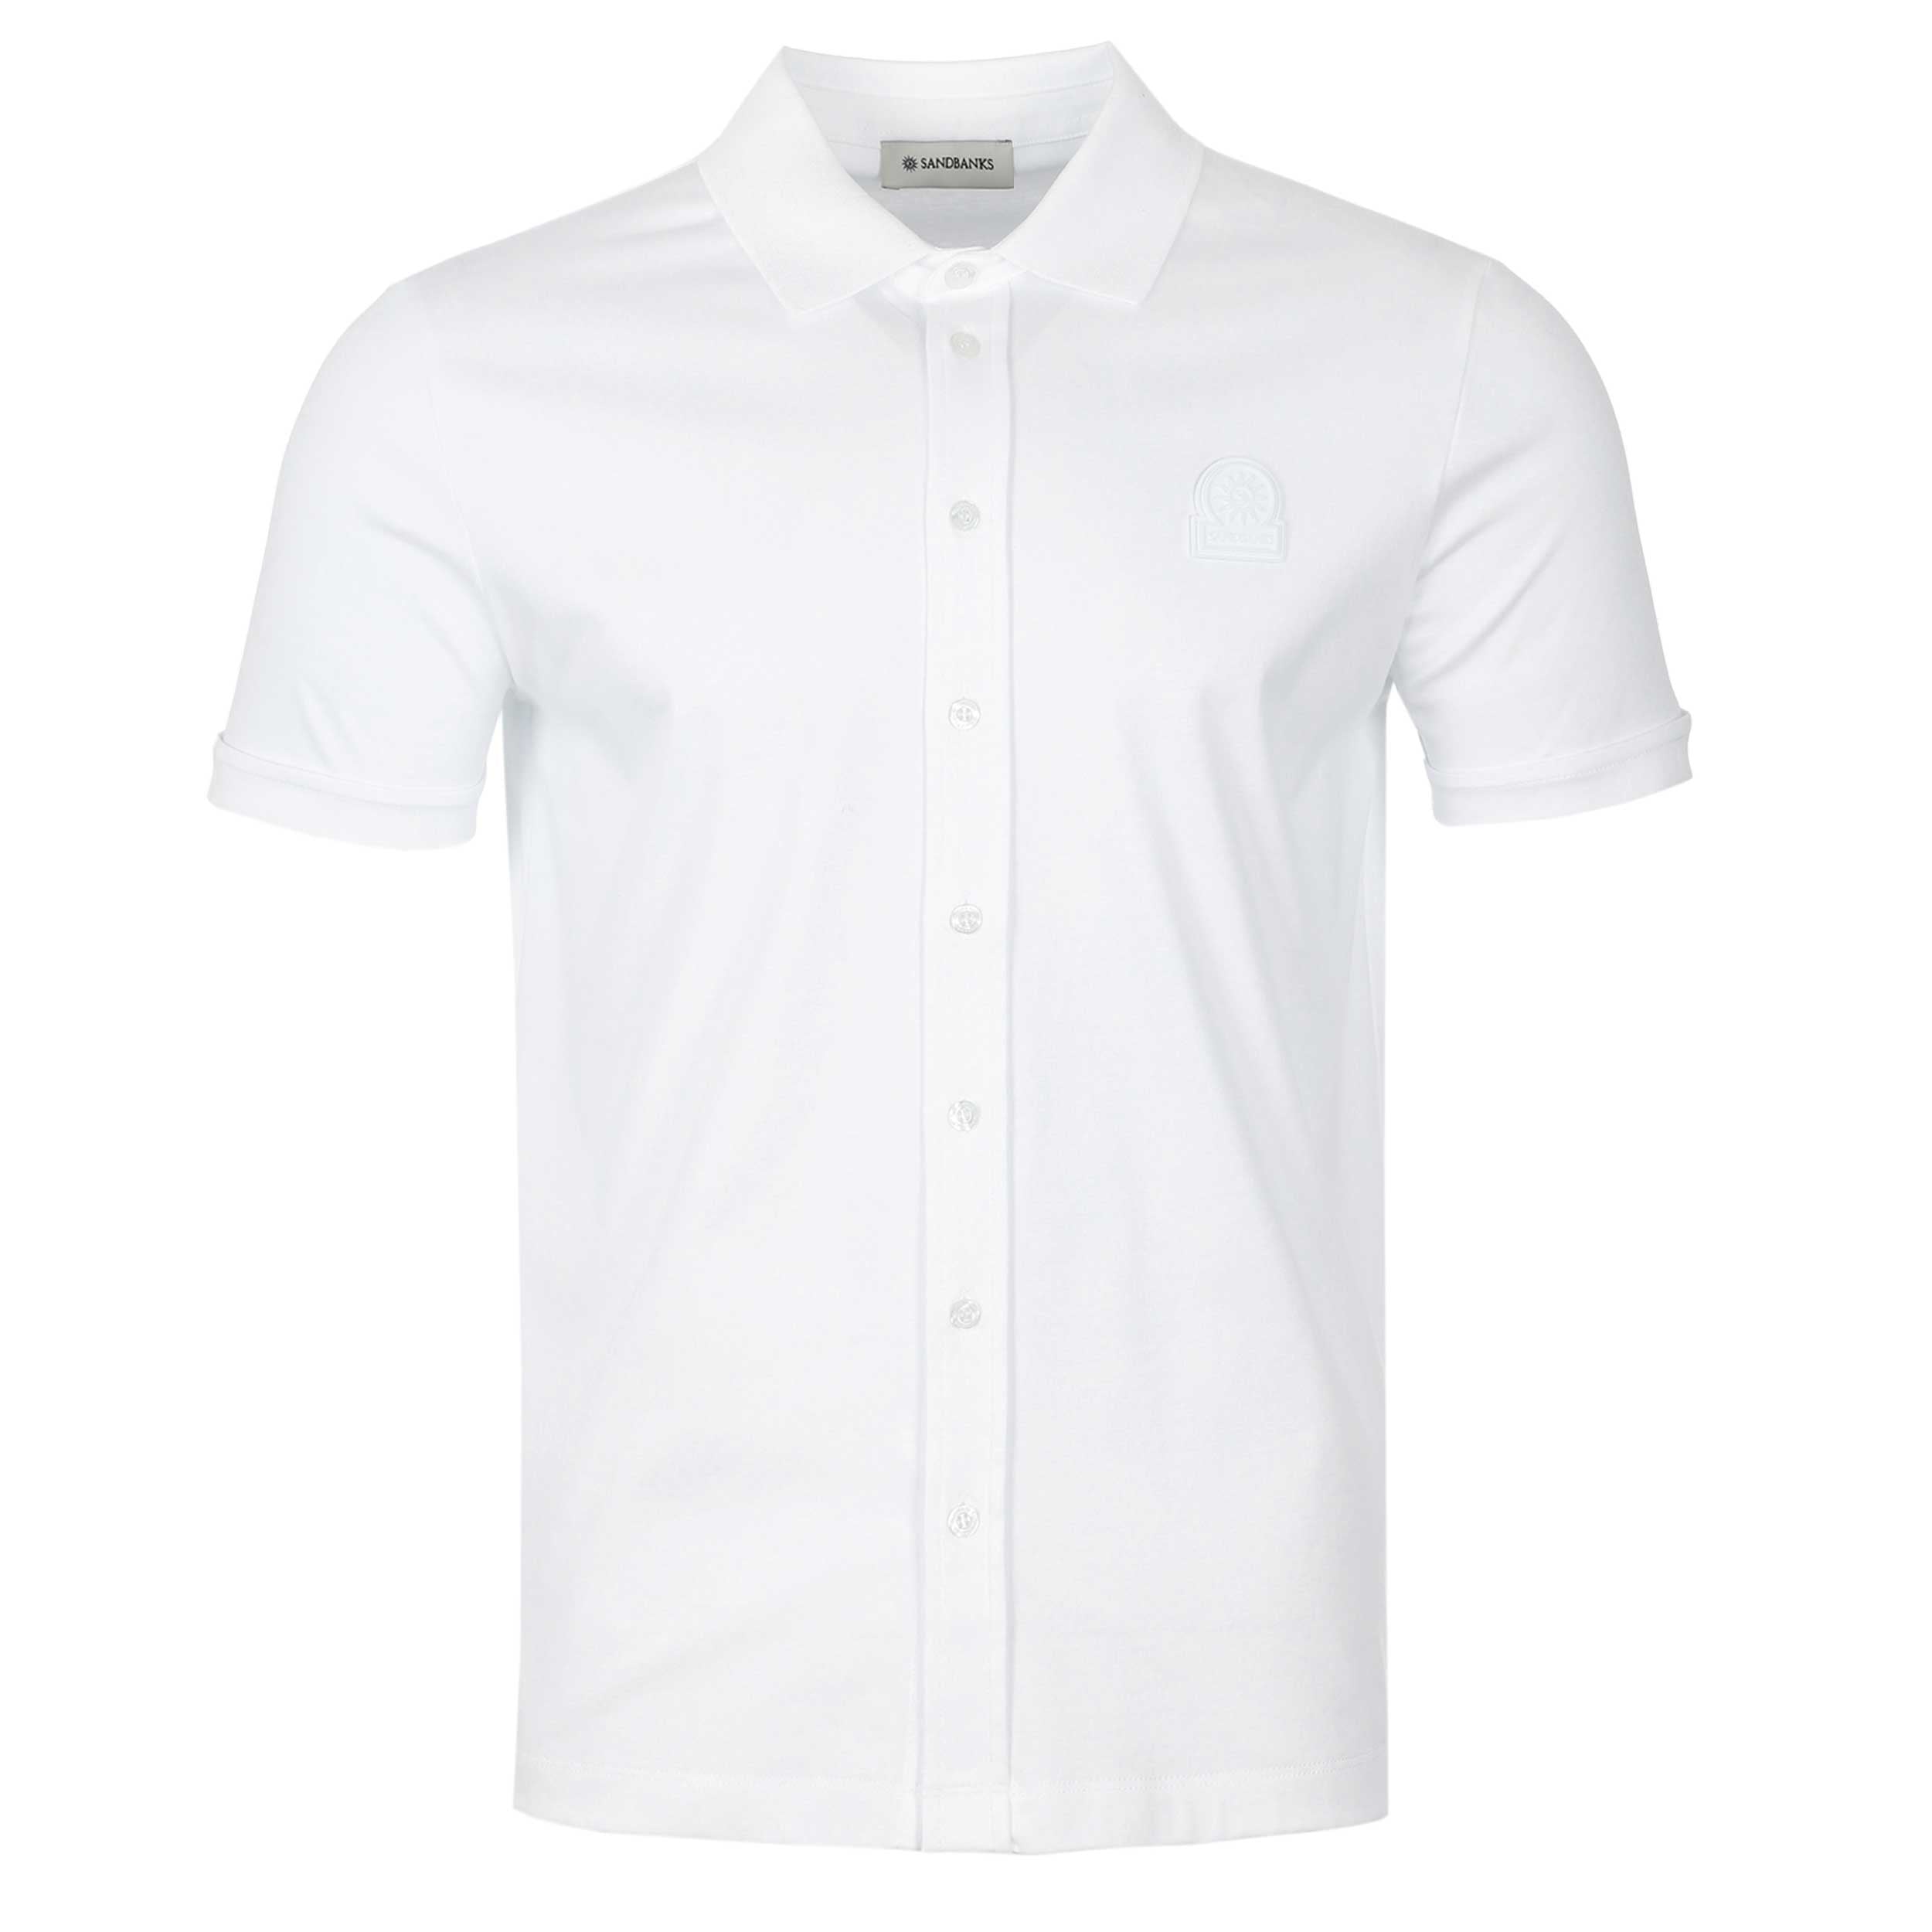 Sandbanks Interlock Full Button Polo Shirt in White